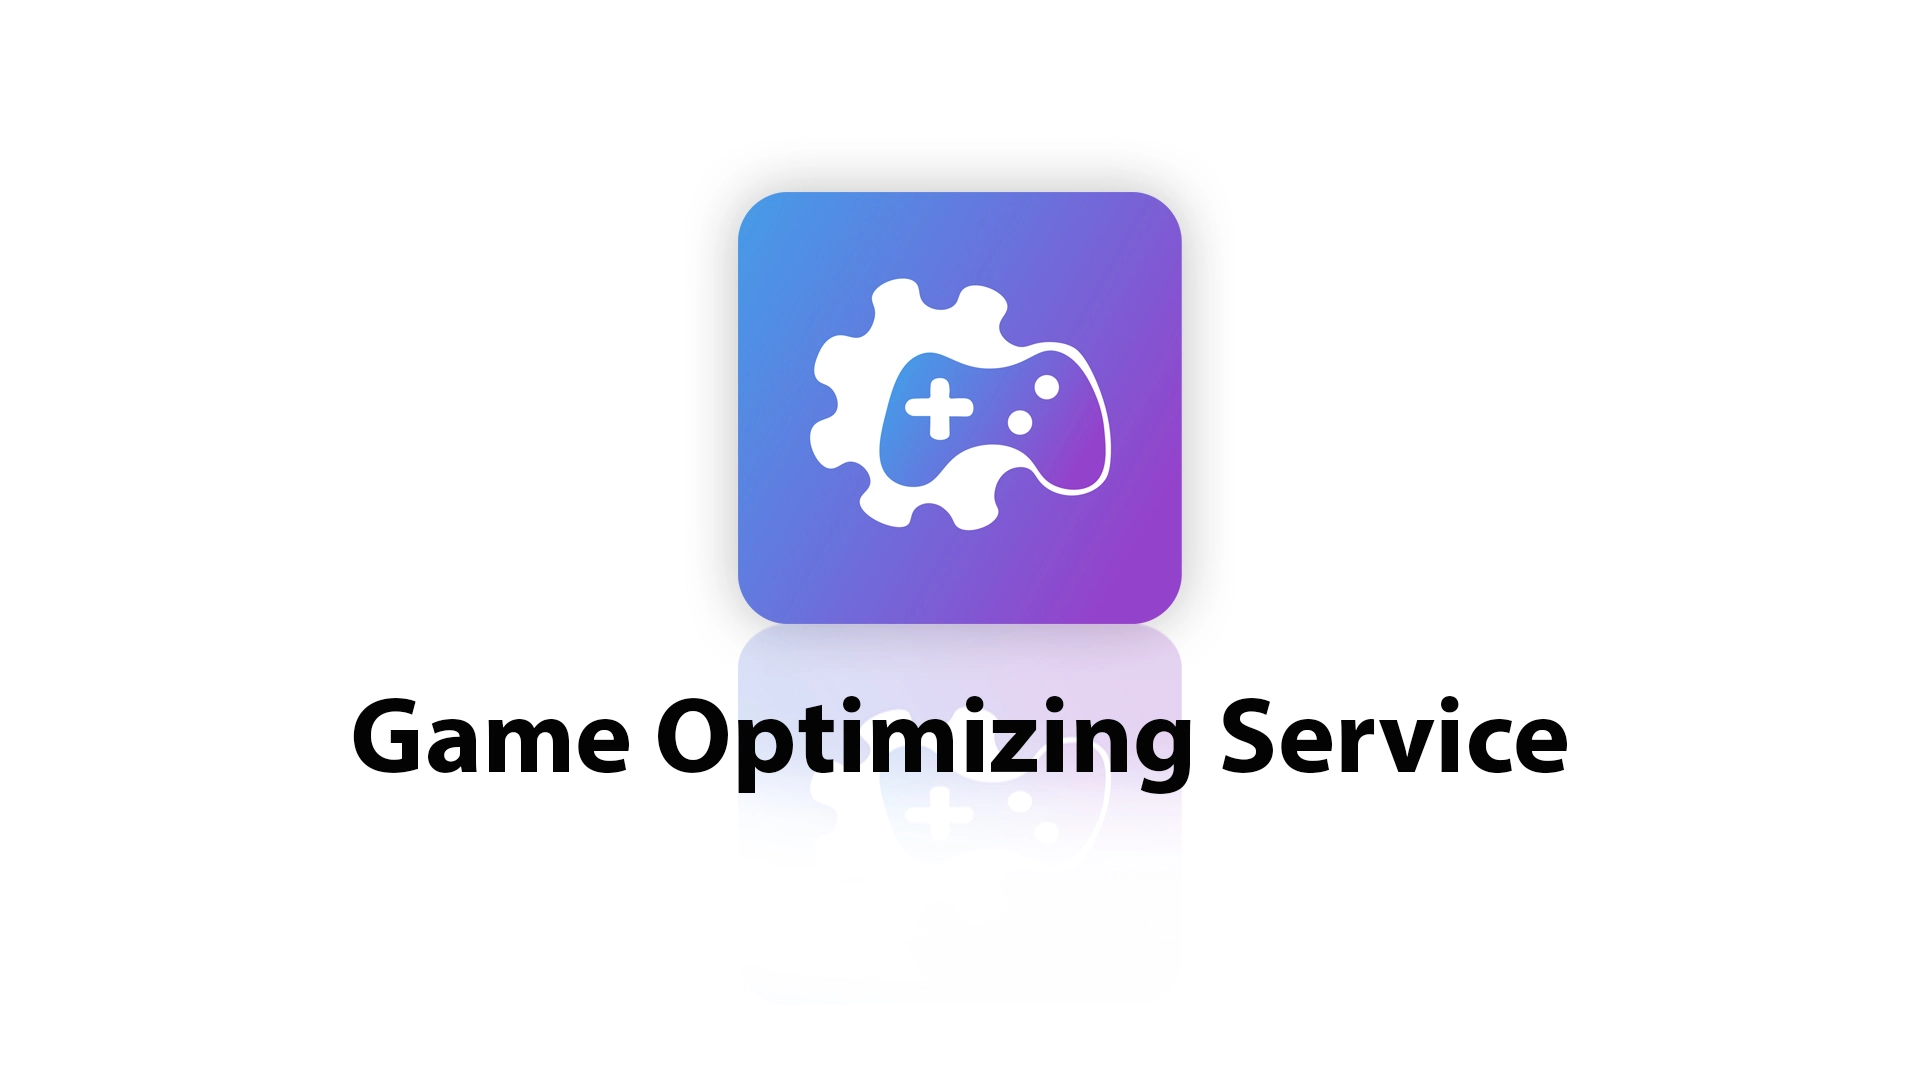 Game optimizing service. Samsung game optimizing service.